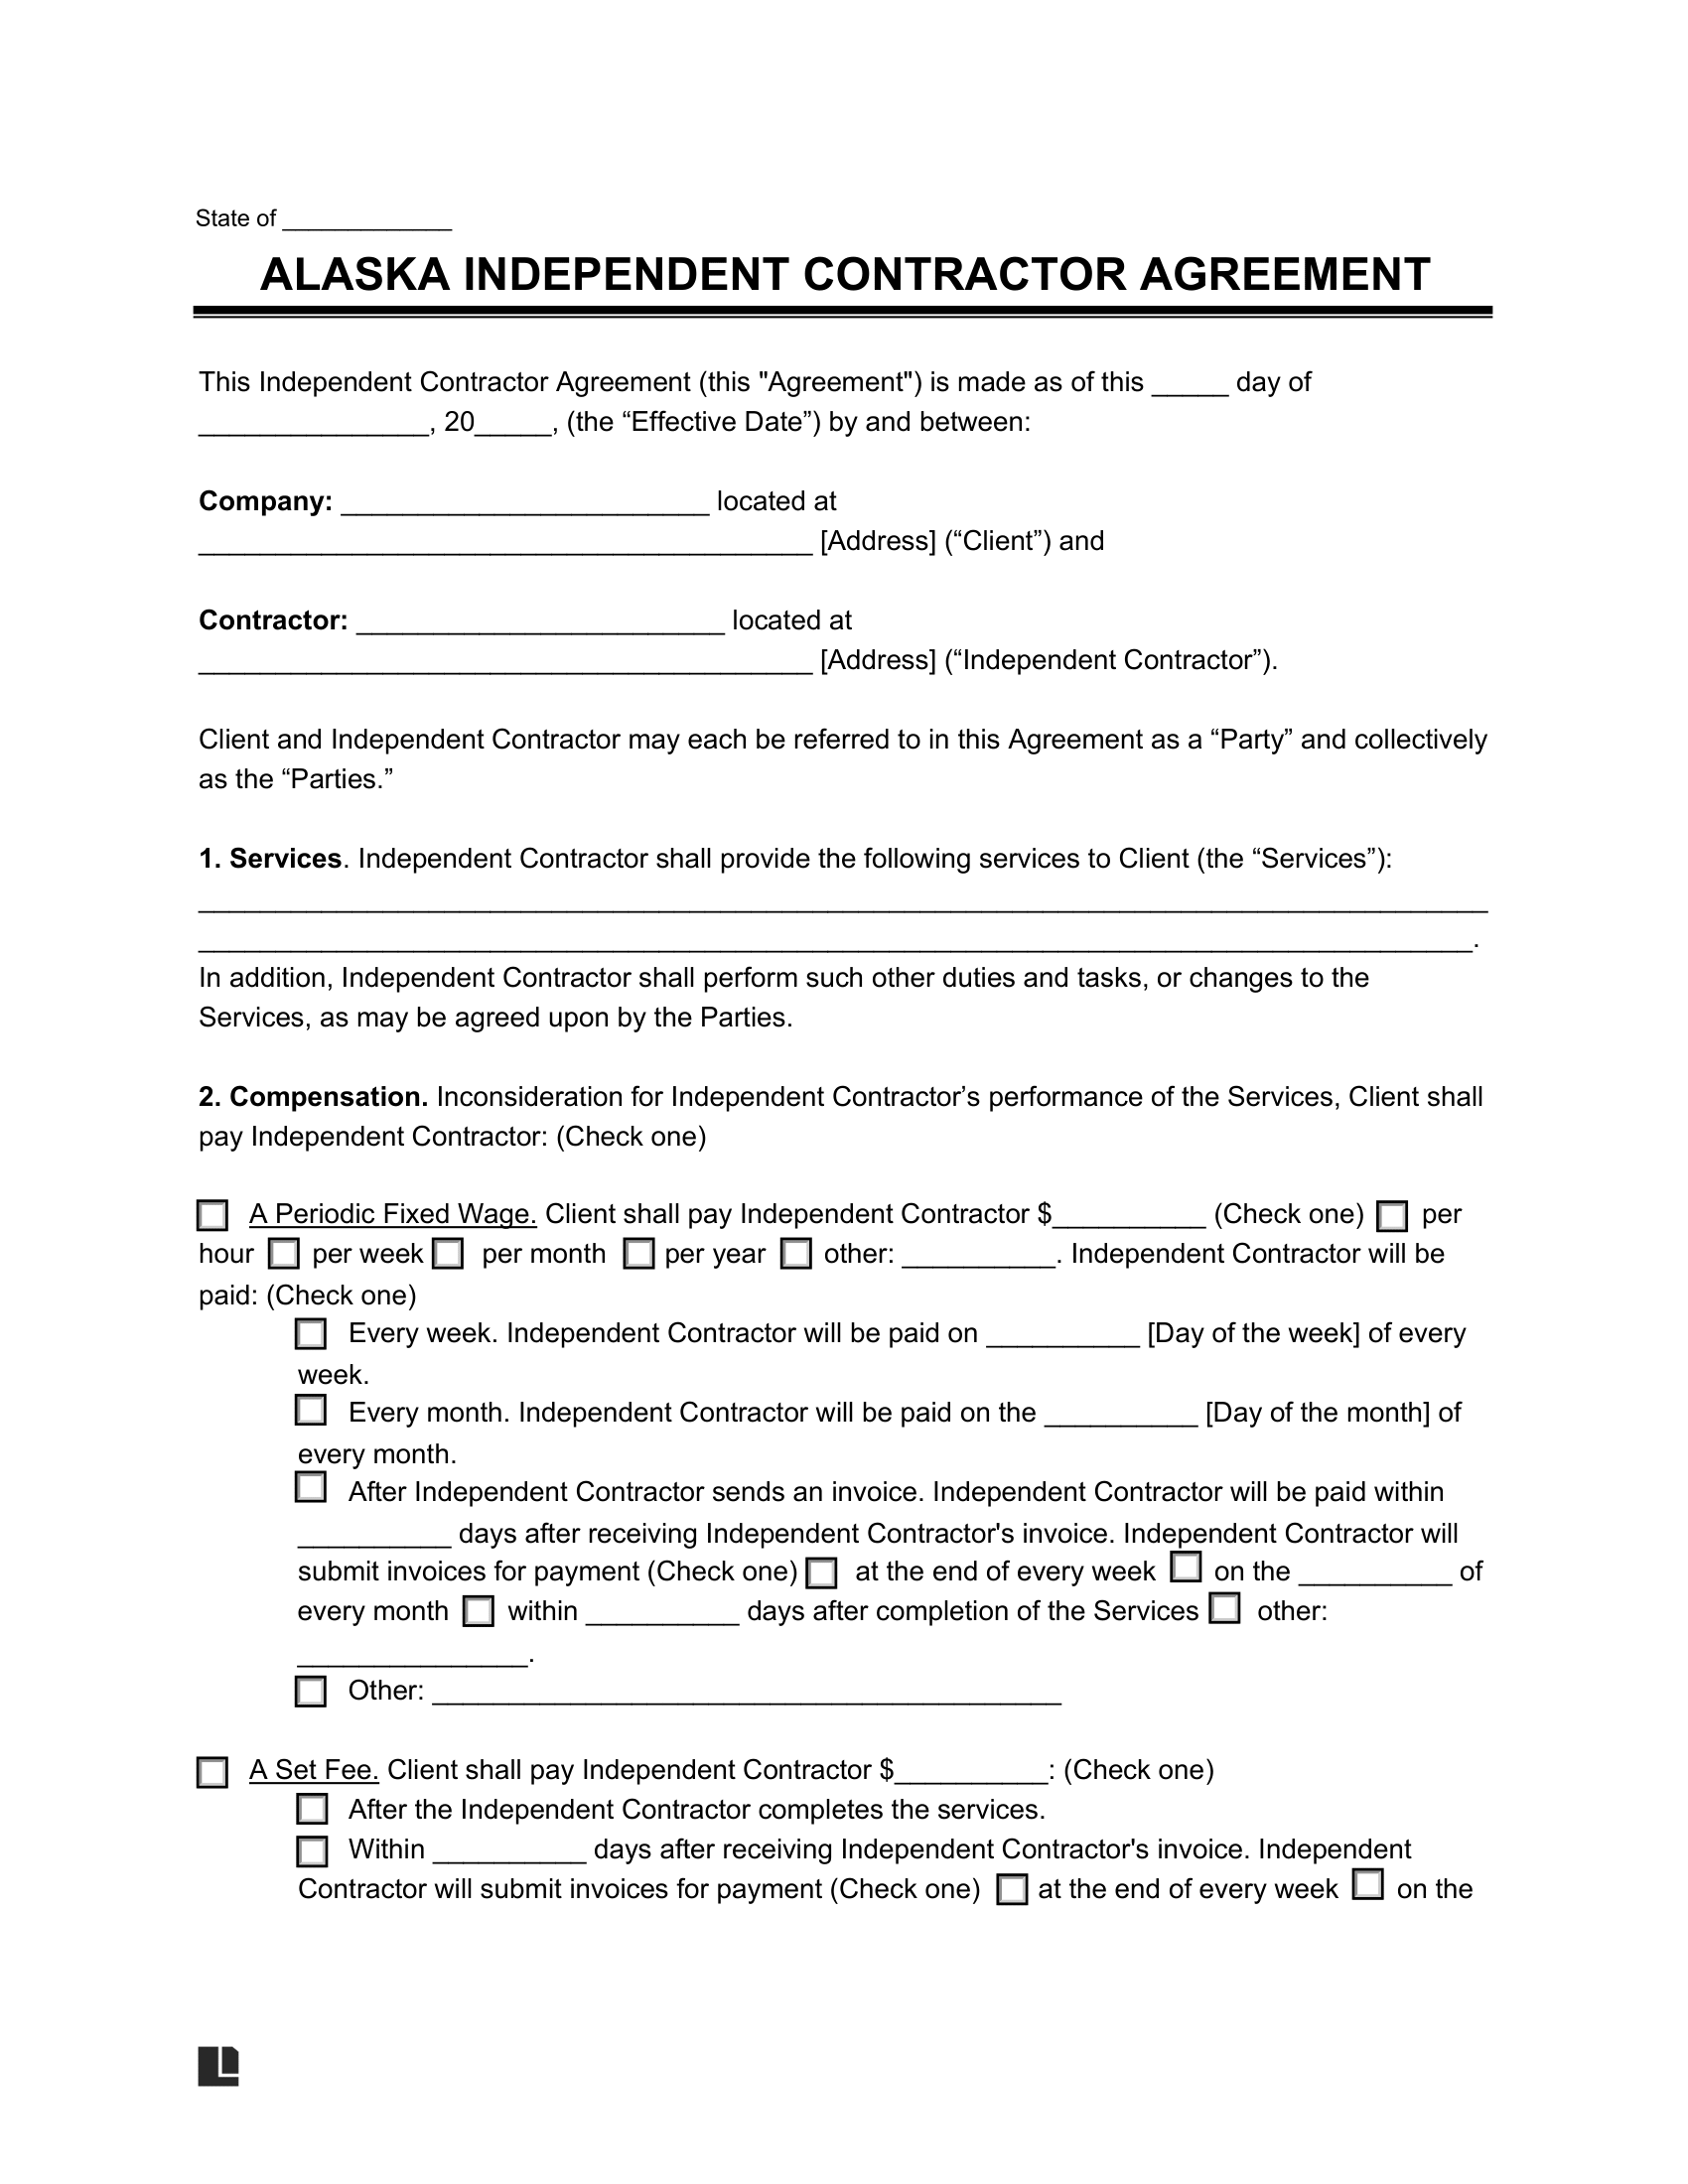 Alaska Independent Contractor Agreement Sample